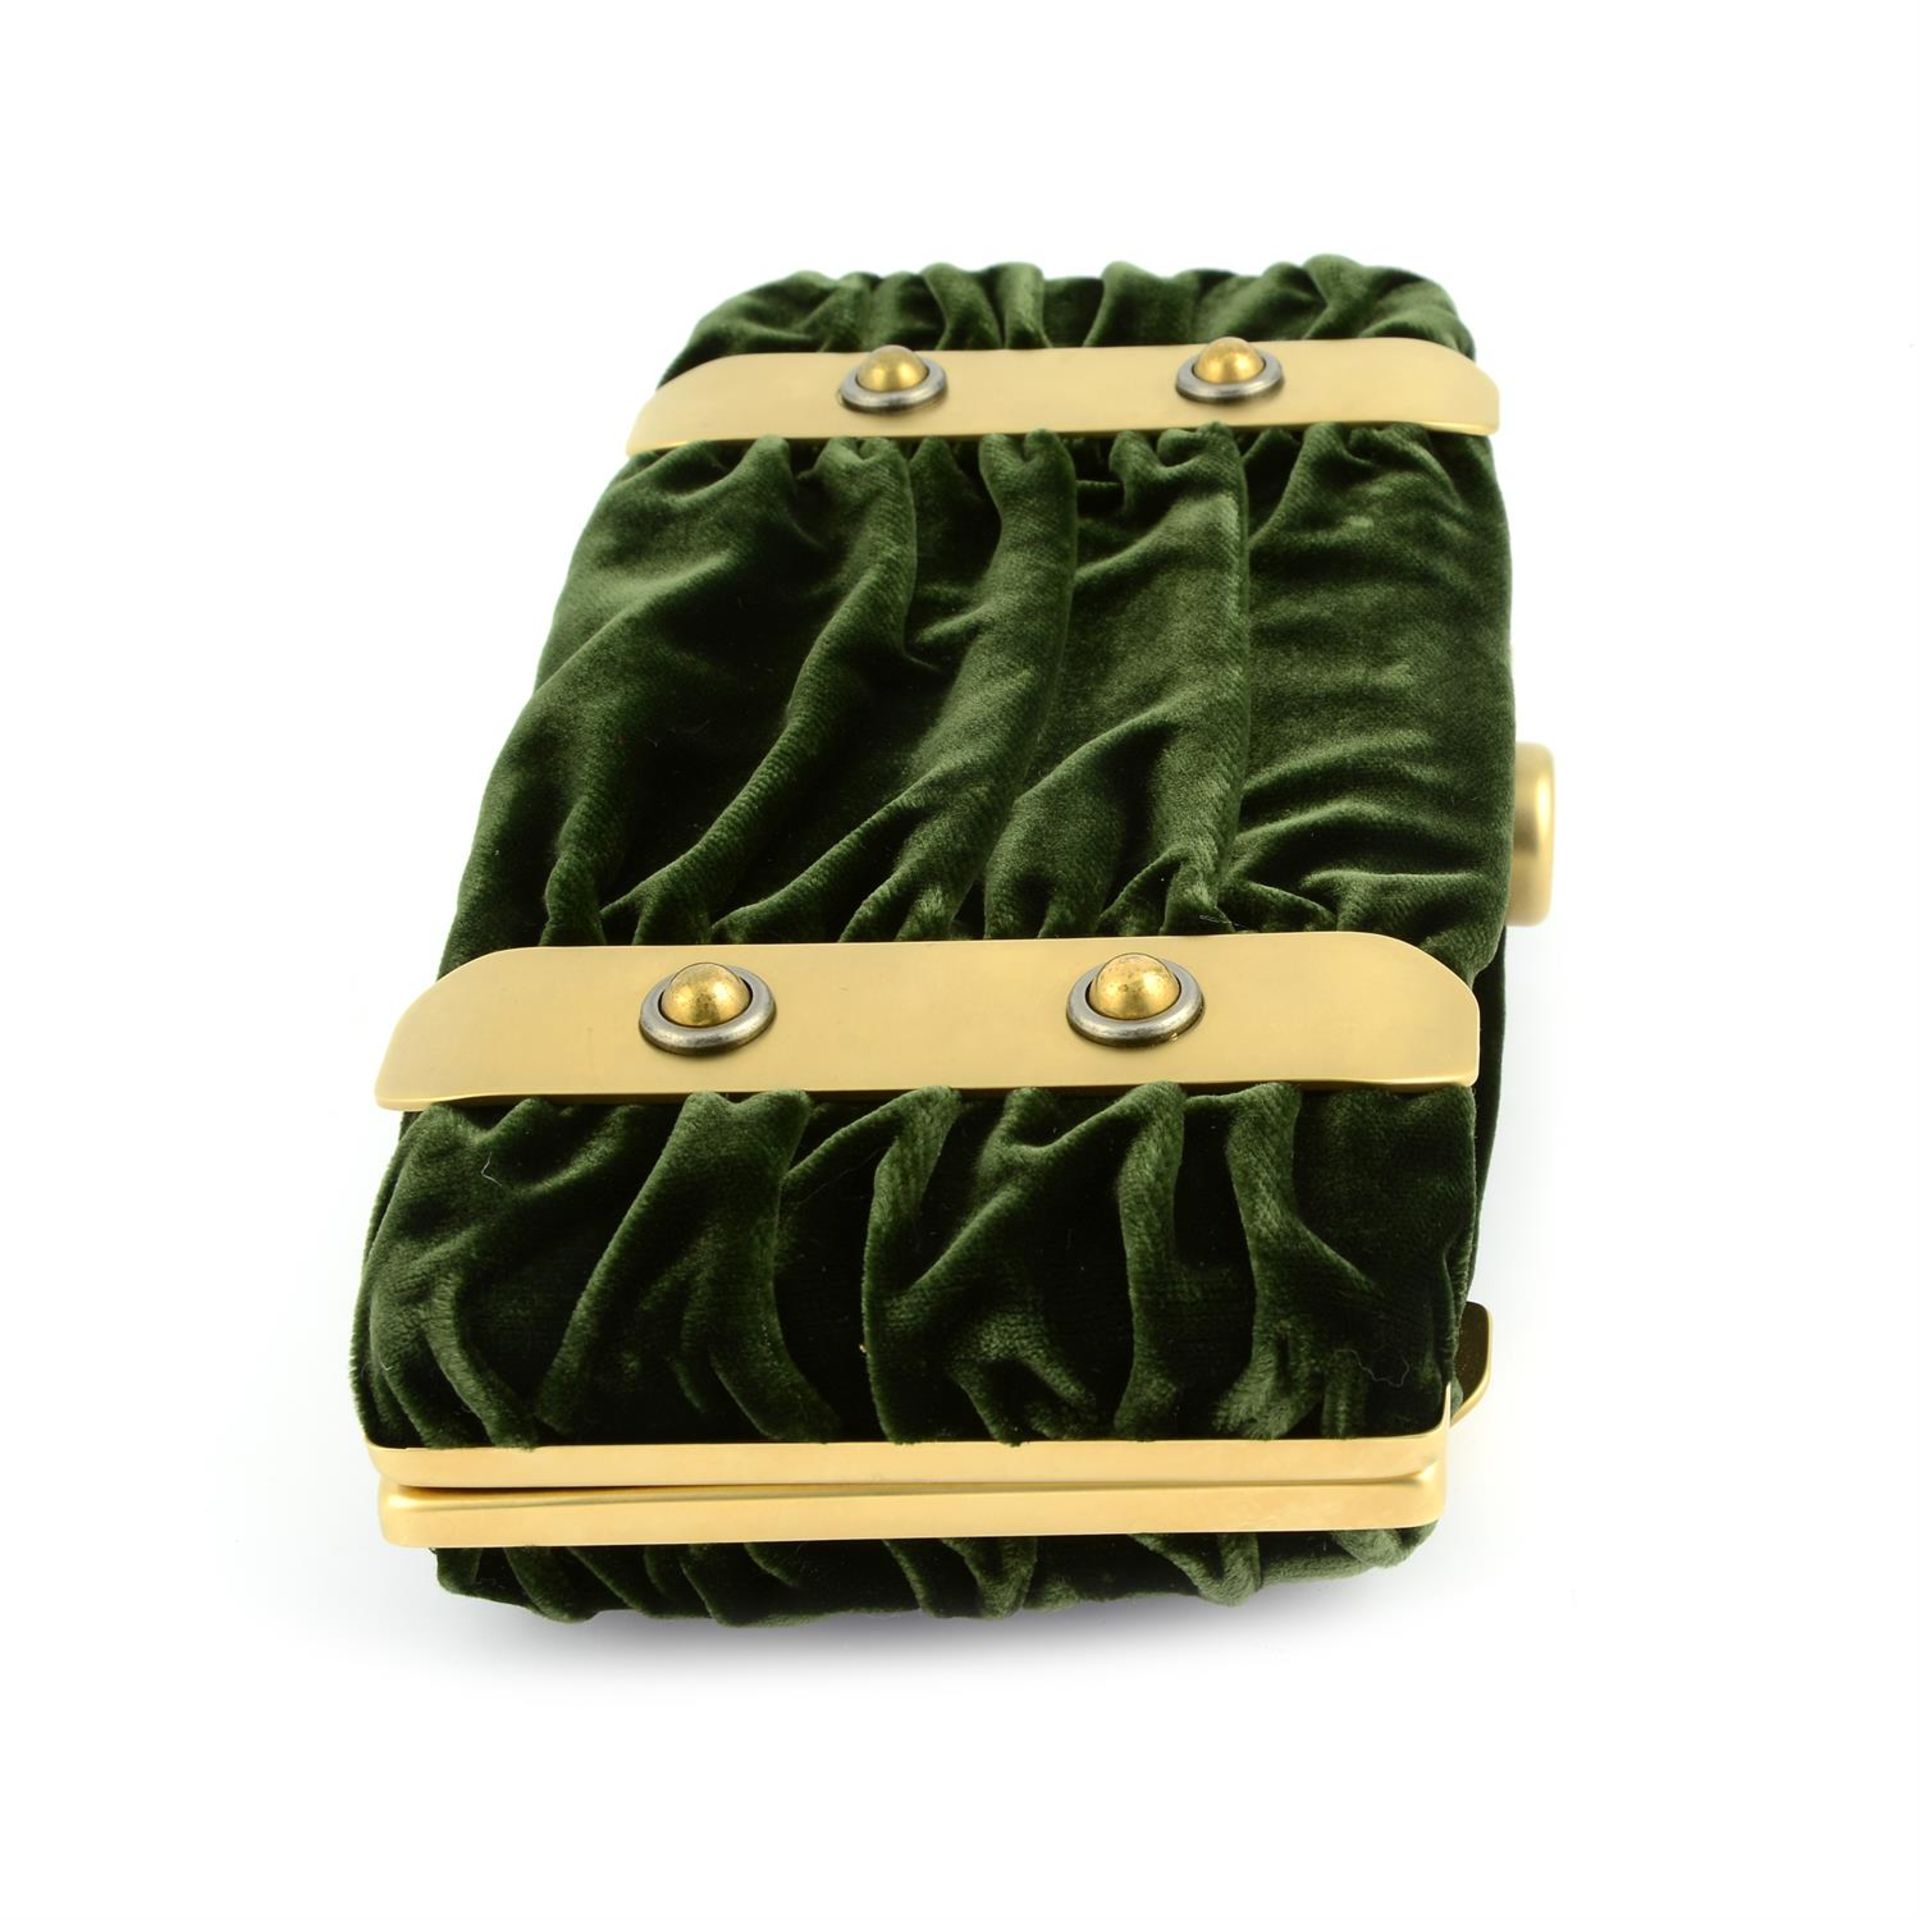 STELLA MCCARTNEY - a green velvet clutch. - Image 3 of 5